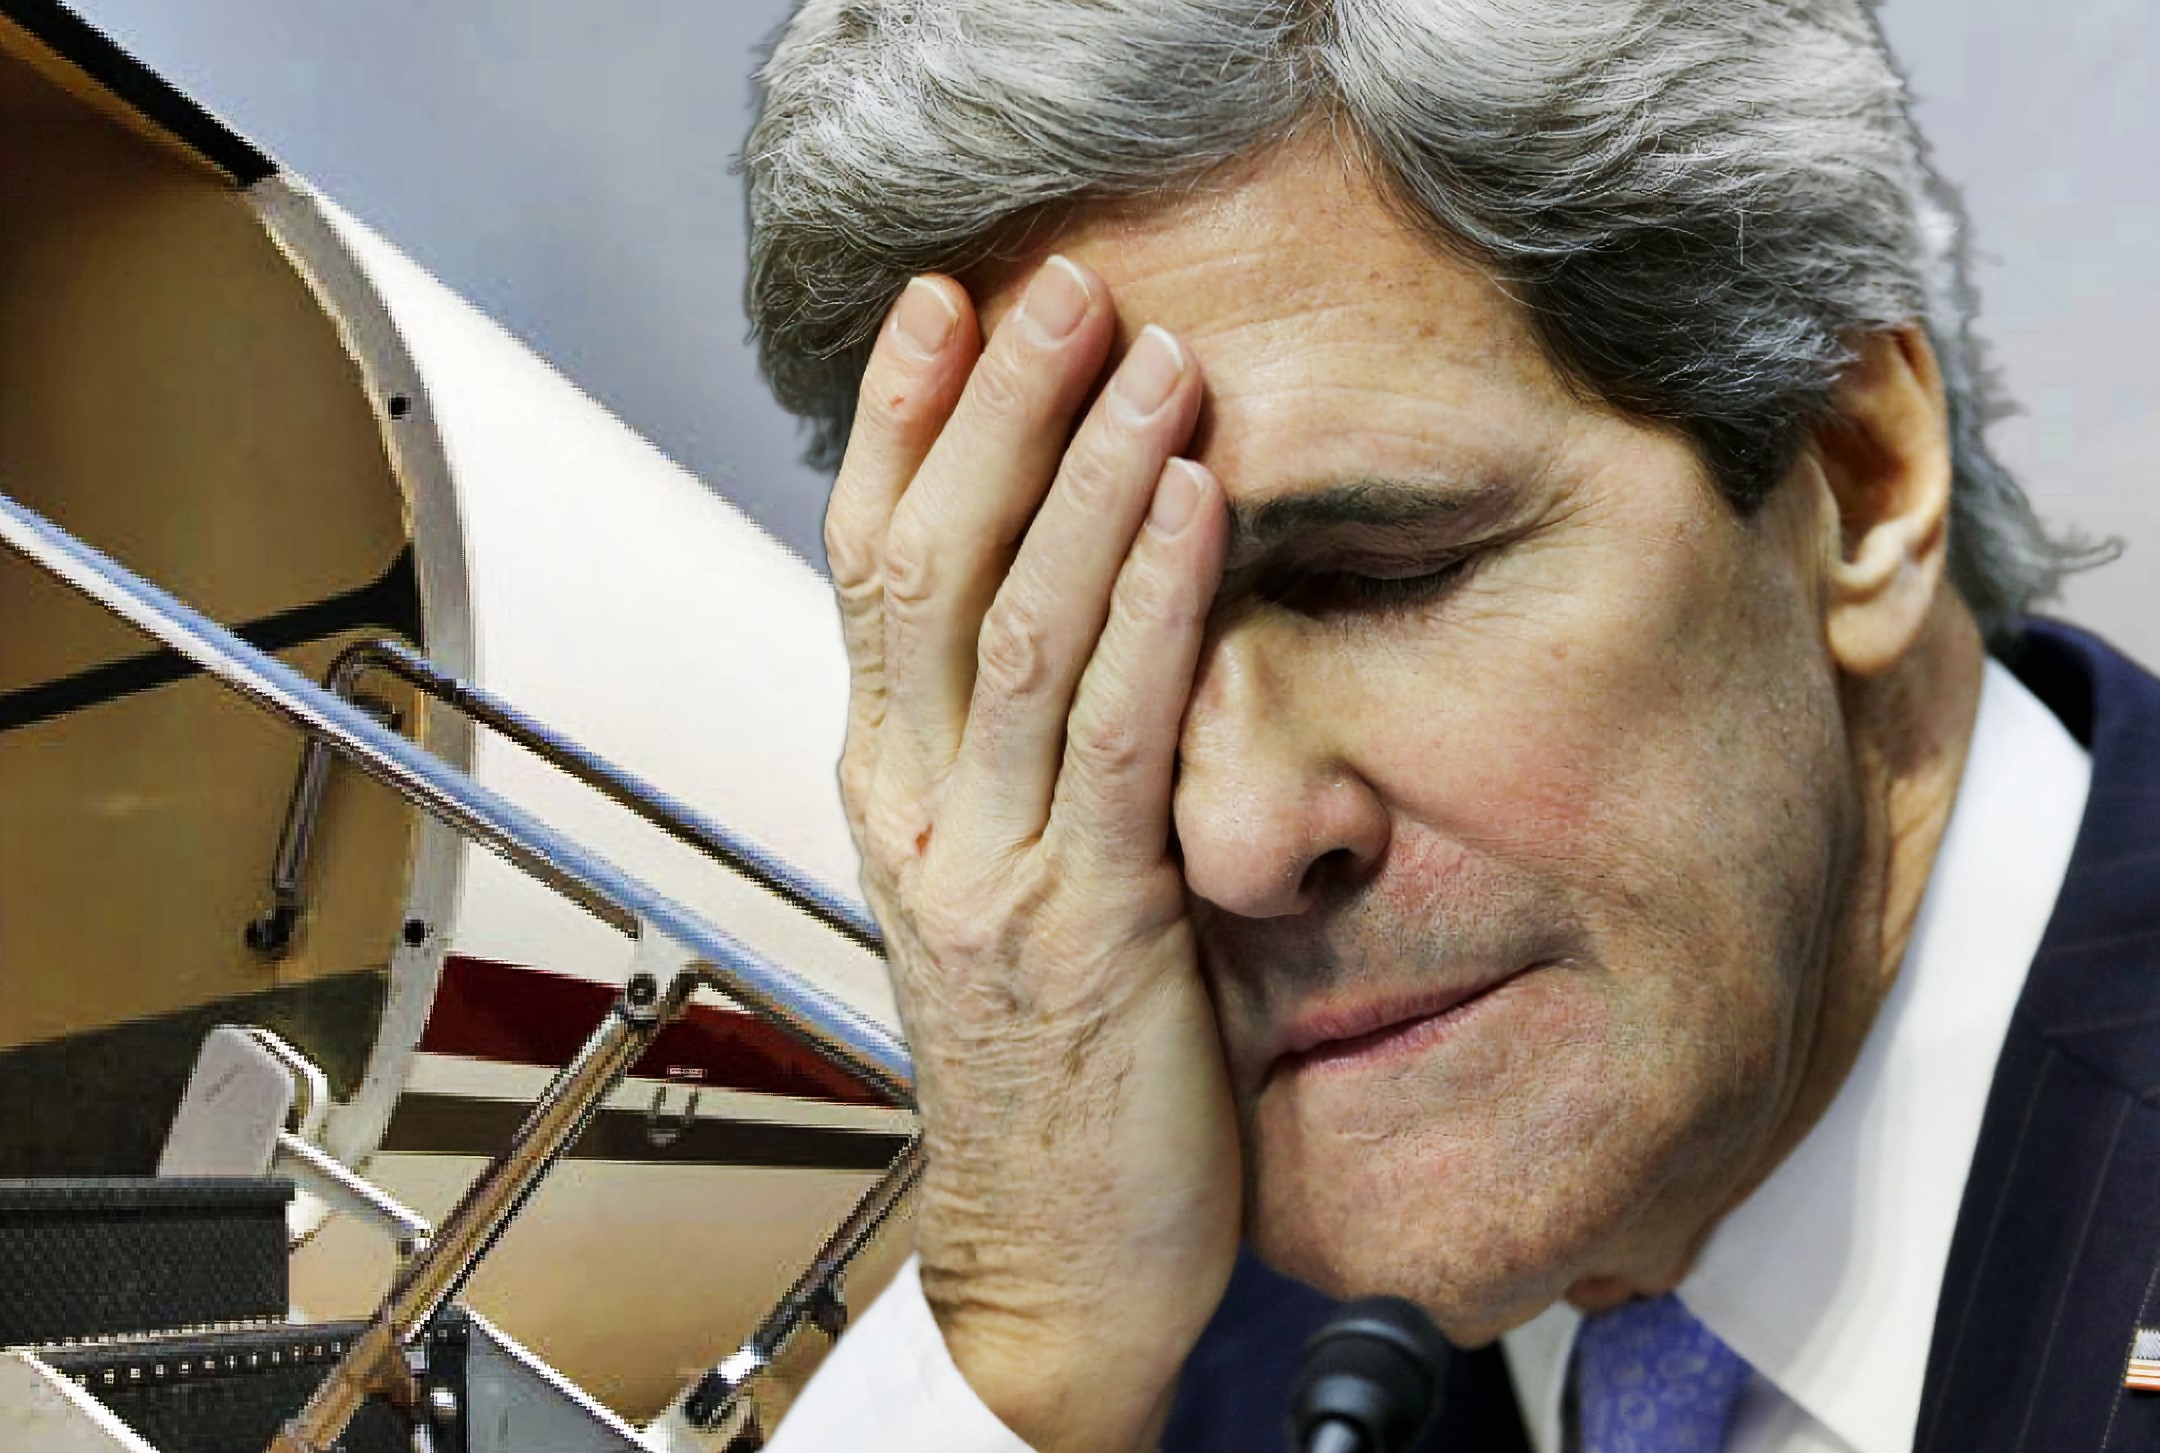 Photo edit of John Kerry and his private jet. Credit: Alexander J. Williams III/Popacta.